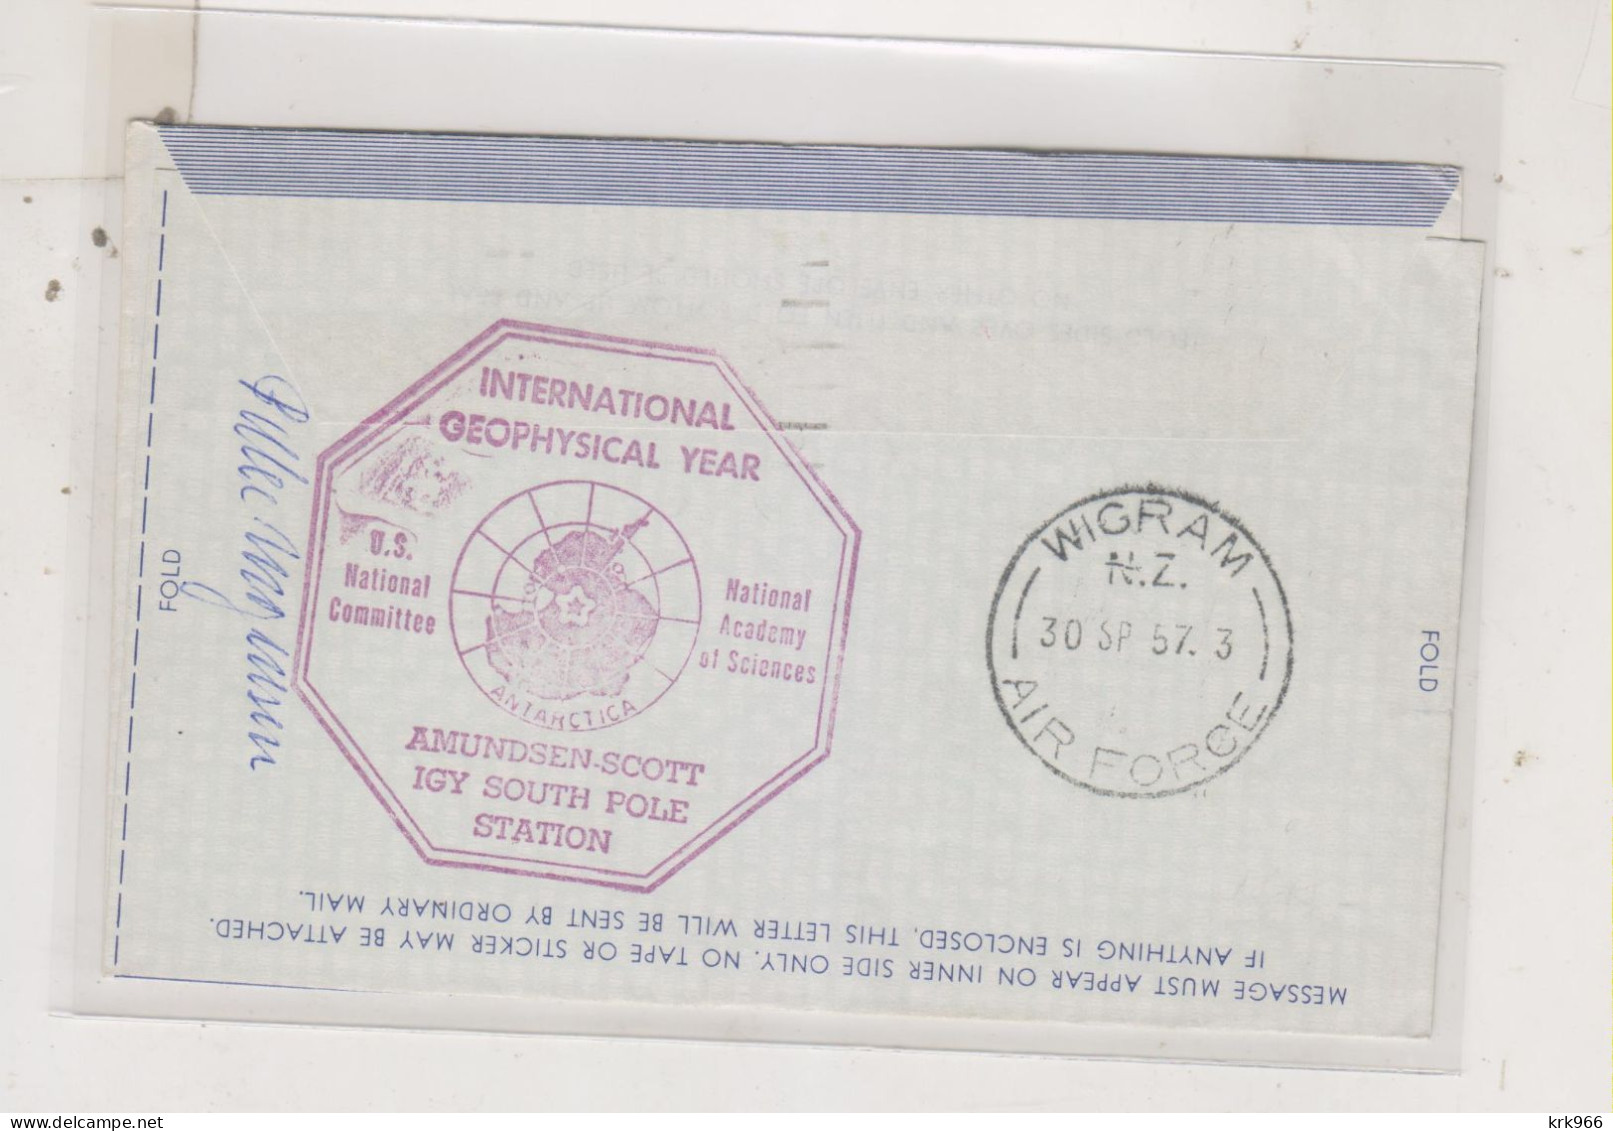 UNITED NATIONS 1957 Nice Airmail Stationery NEW YORK To AMUNDSEN SCOTT IGY SOUTH POLE STATION - Cartas & Documentos